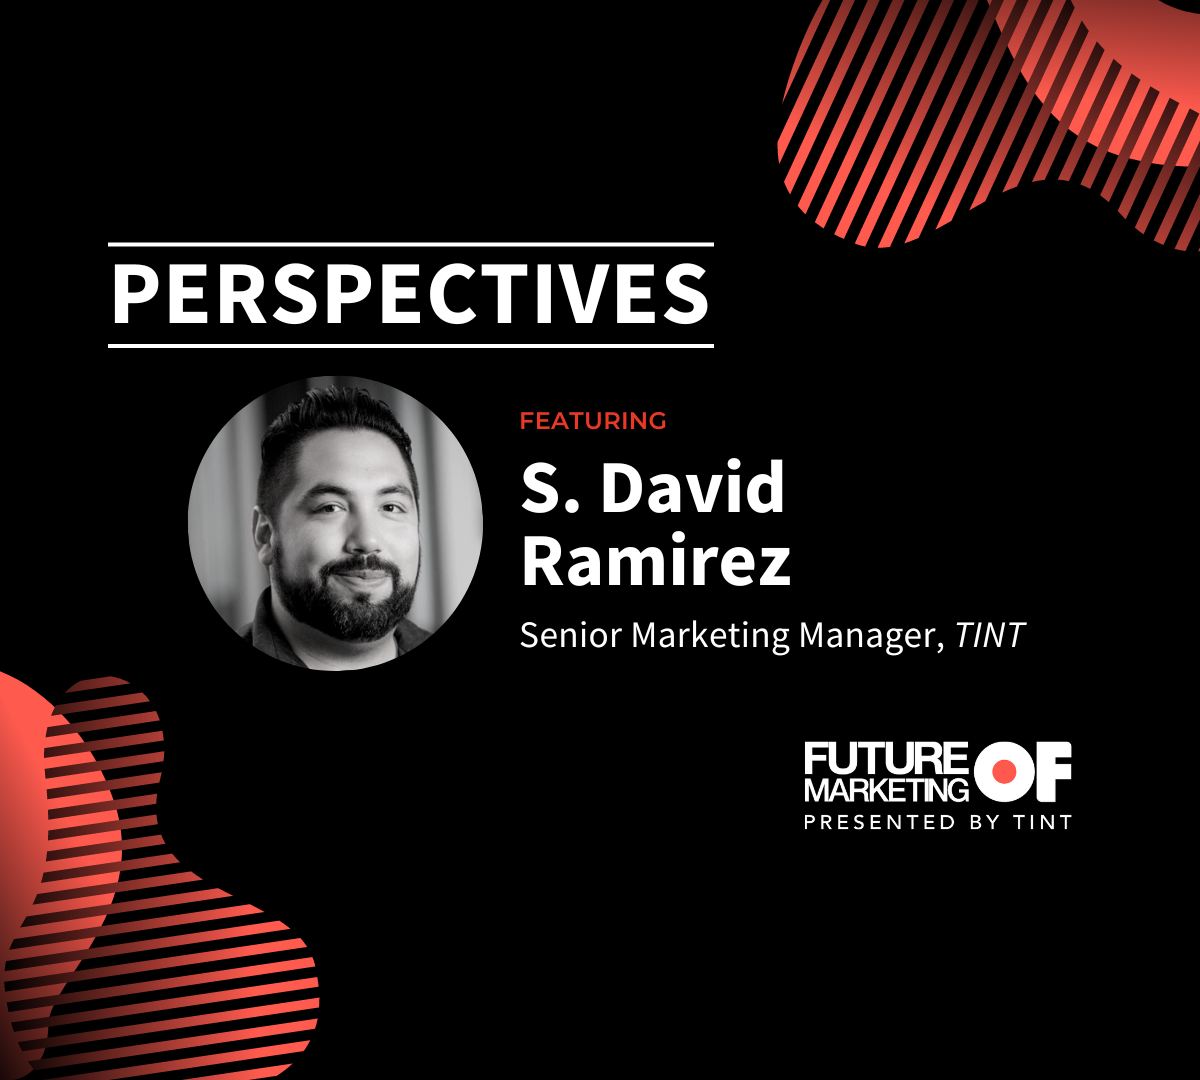 Future of Marketing featuring David Ramix, Sr. Marketing Manager at TINT